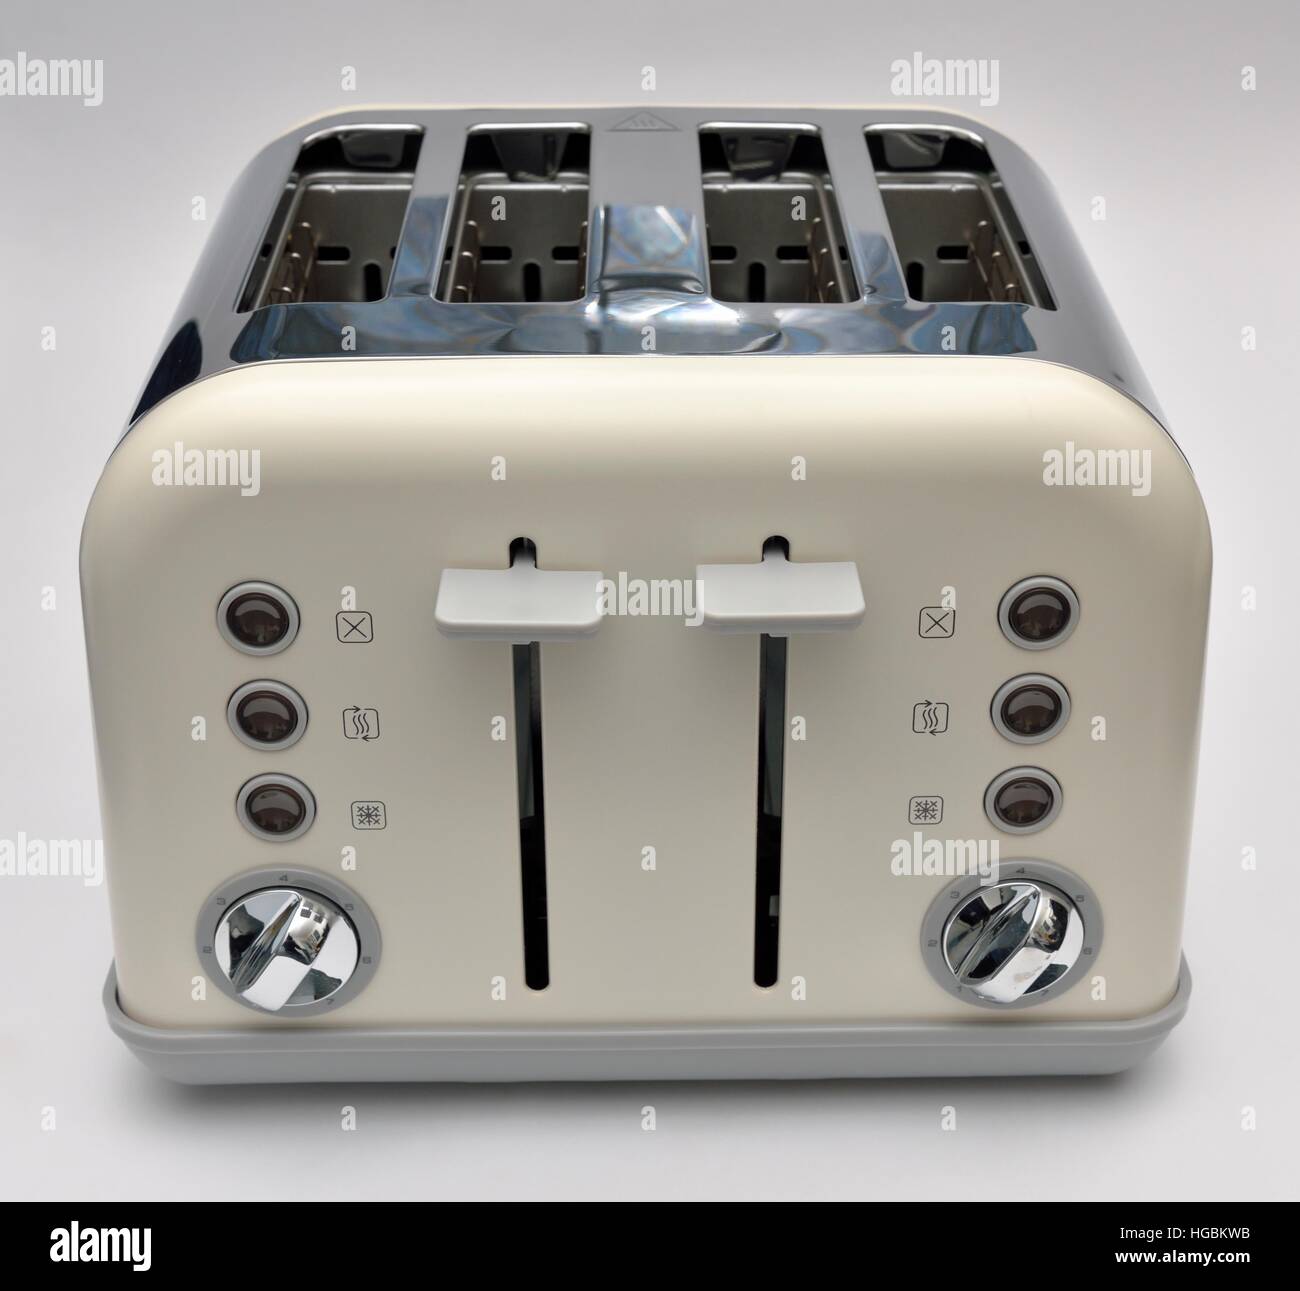 https://c8.alamy.com/comp/HGBKWB/a-4-slice-toaster-on-a-white-background-branding-removed-HGBKWB.jpg